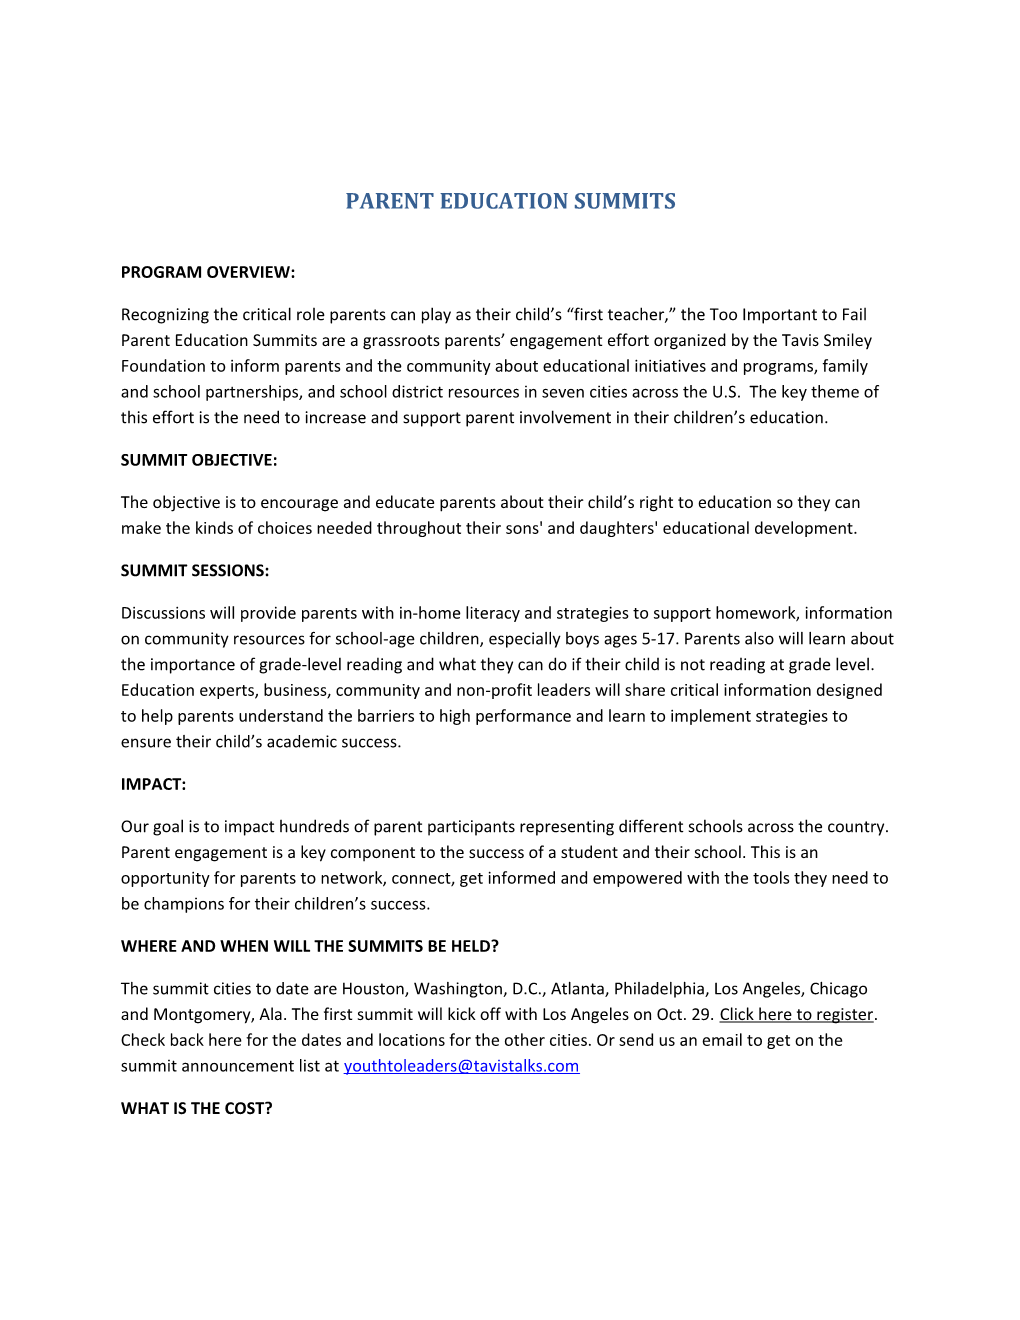 Parent Education Summits